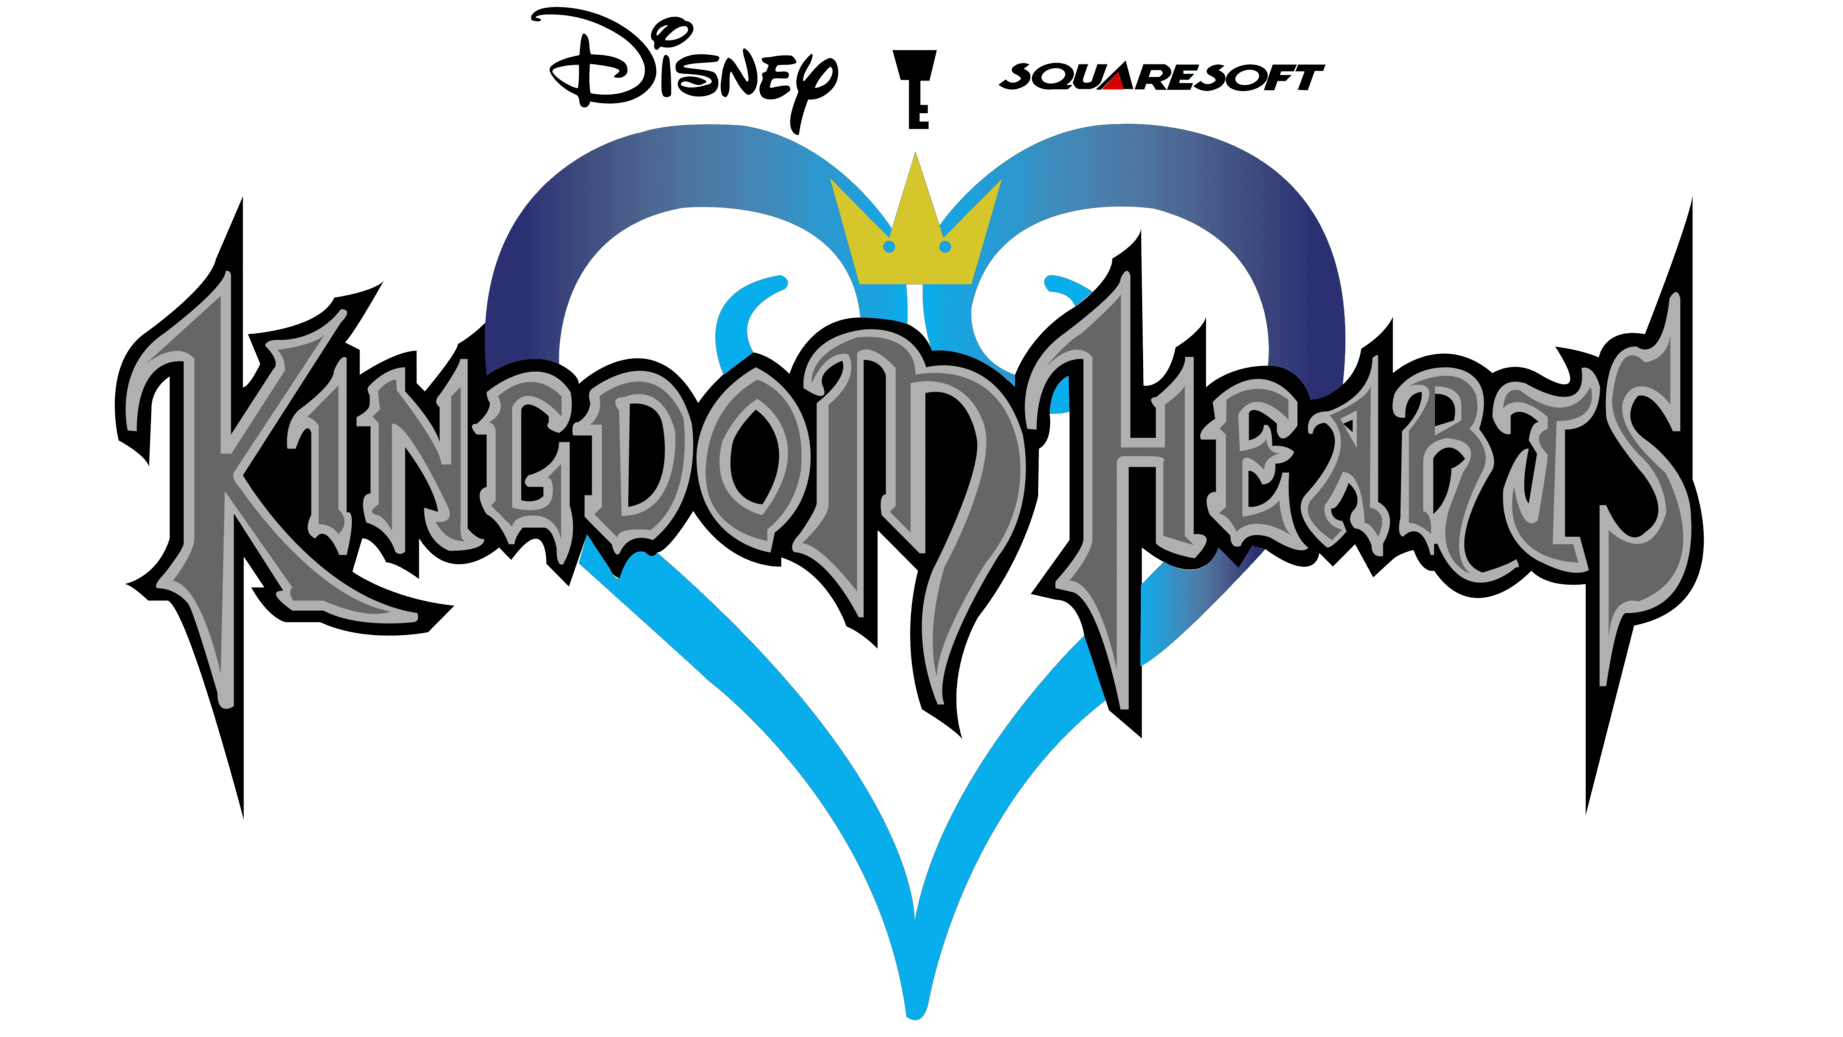 Kingdom hearts symbol